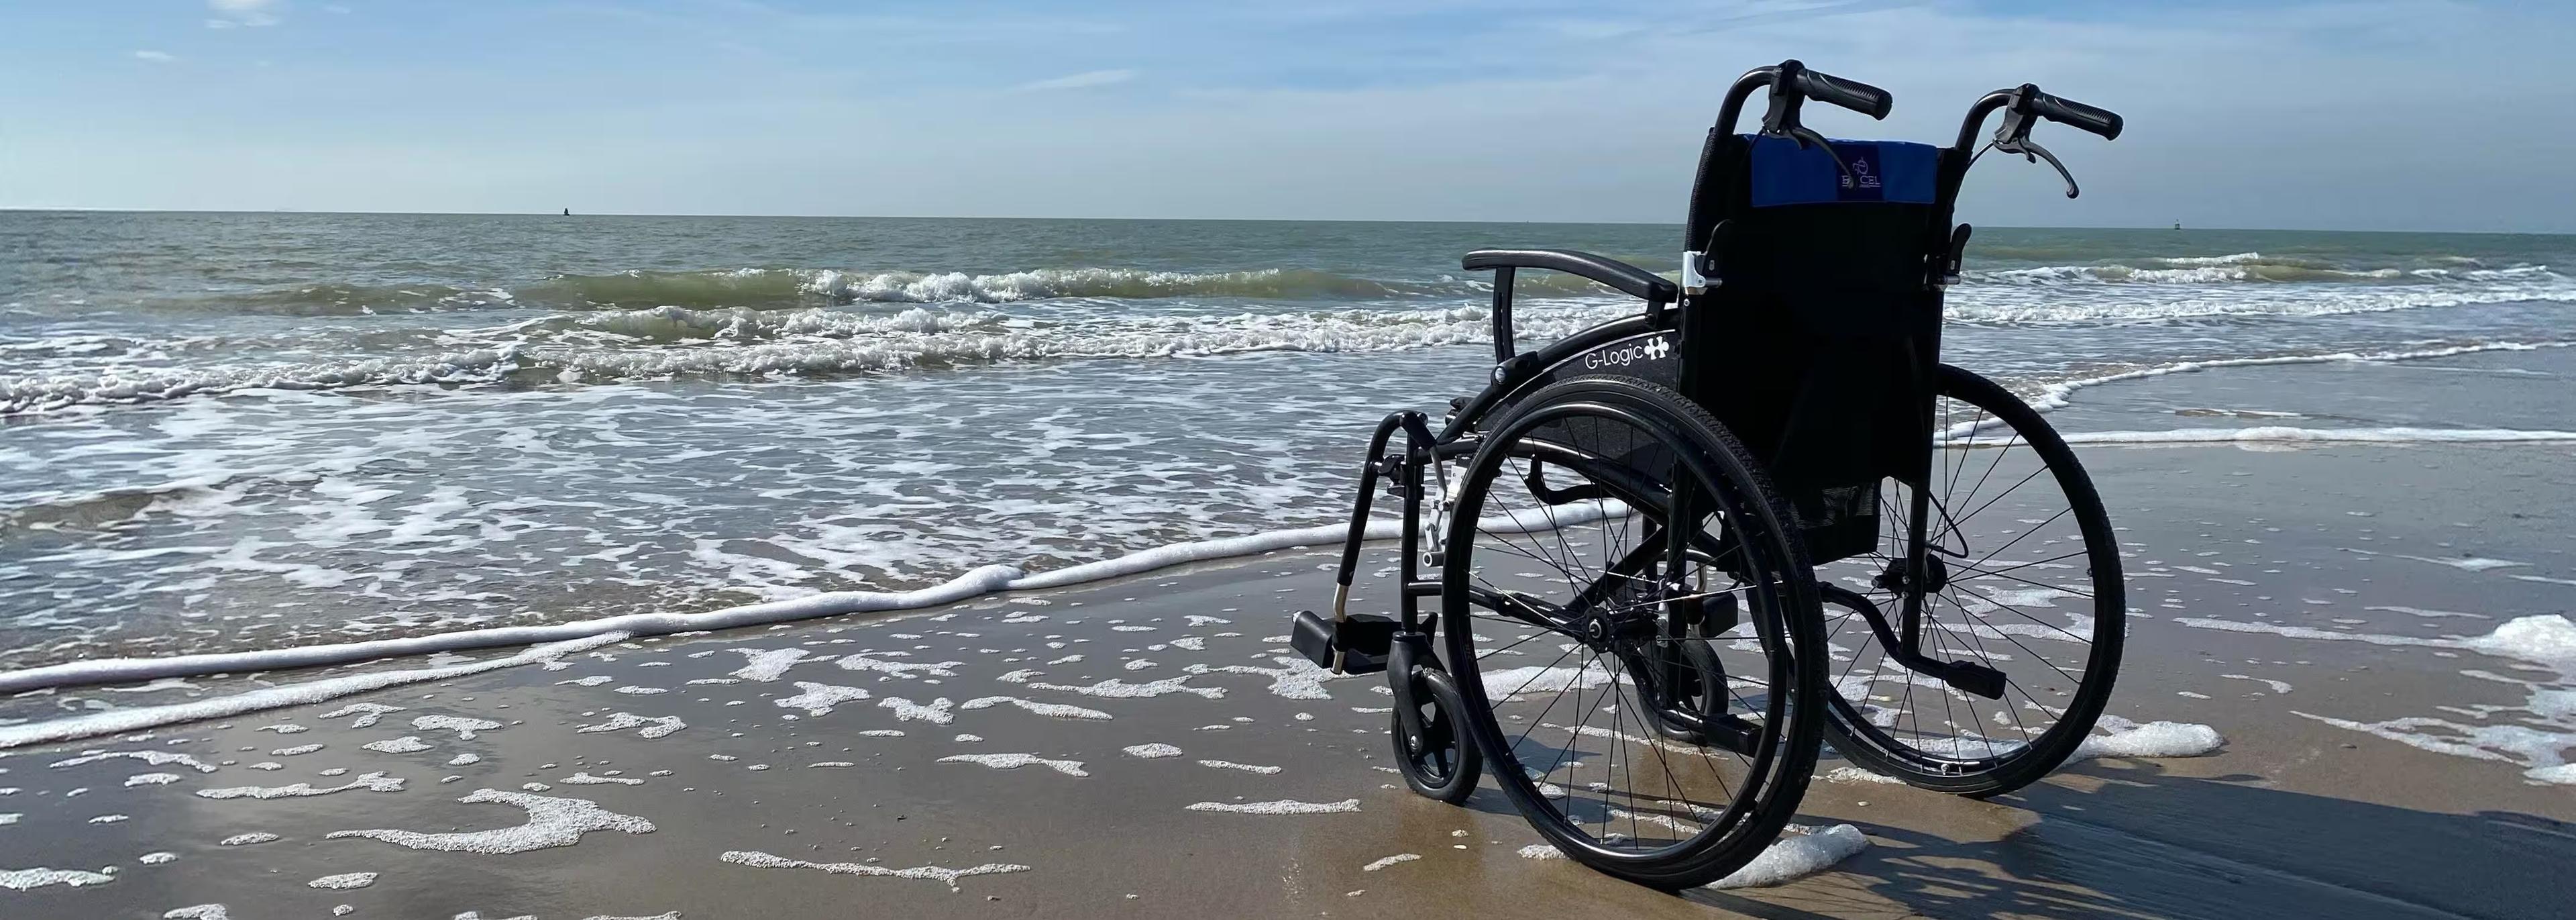 Best Disability Access Beaches  Photo - Sandee